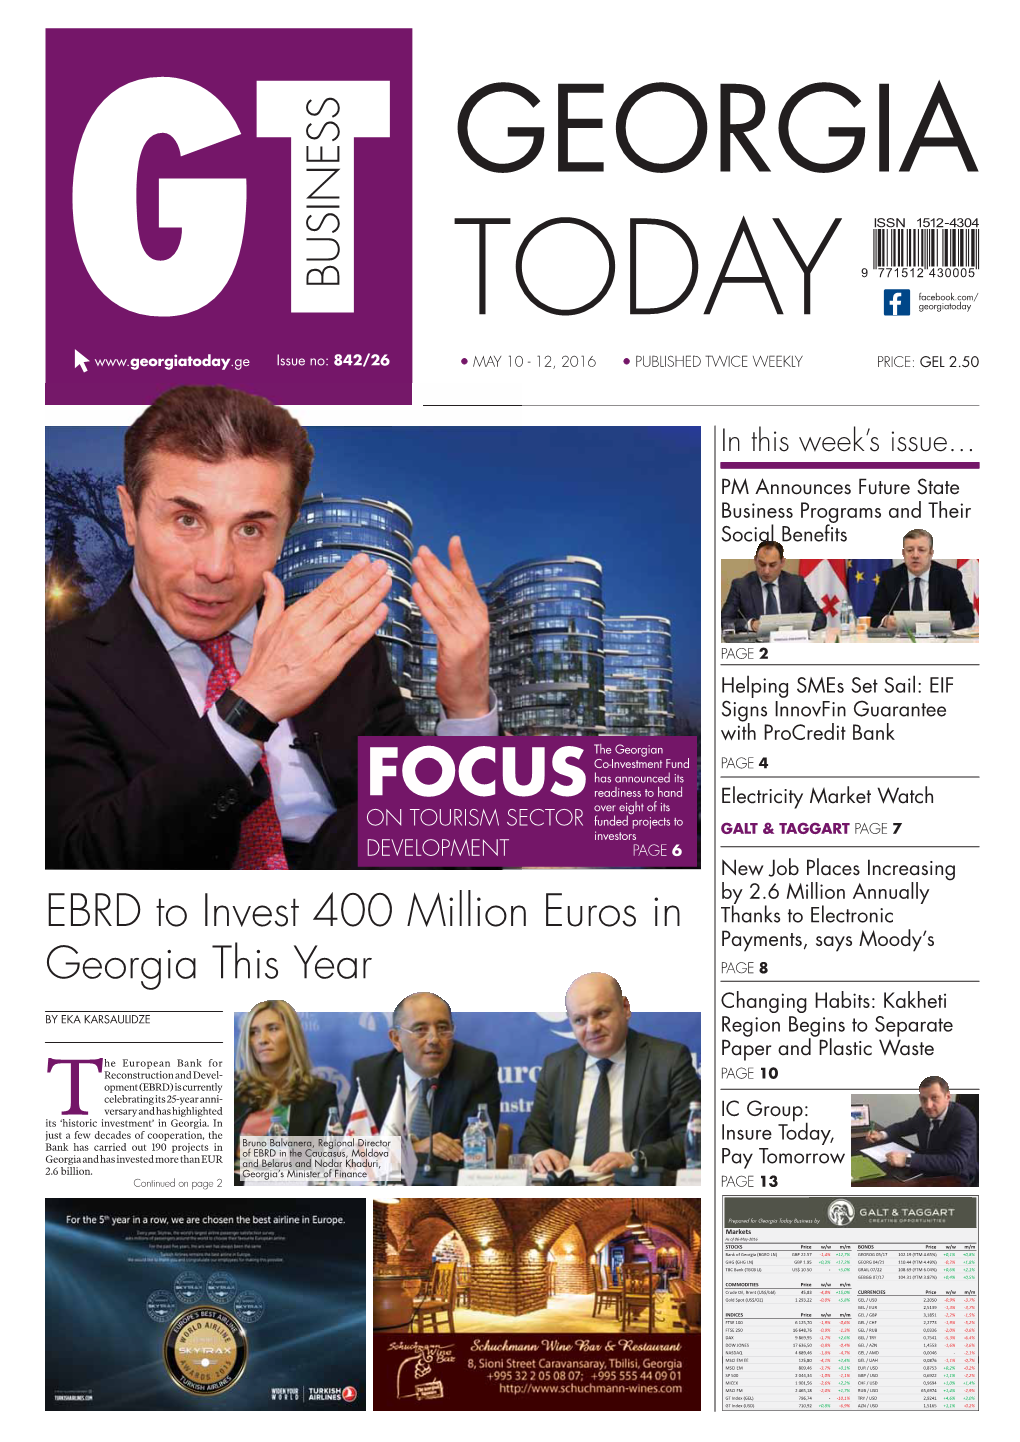 EBRD to Invest 400 Million Euros in Georgia This Year